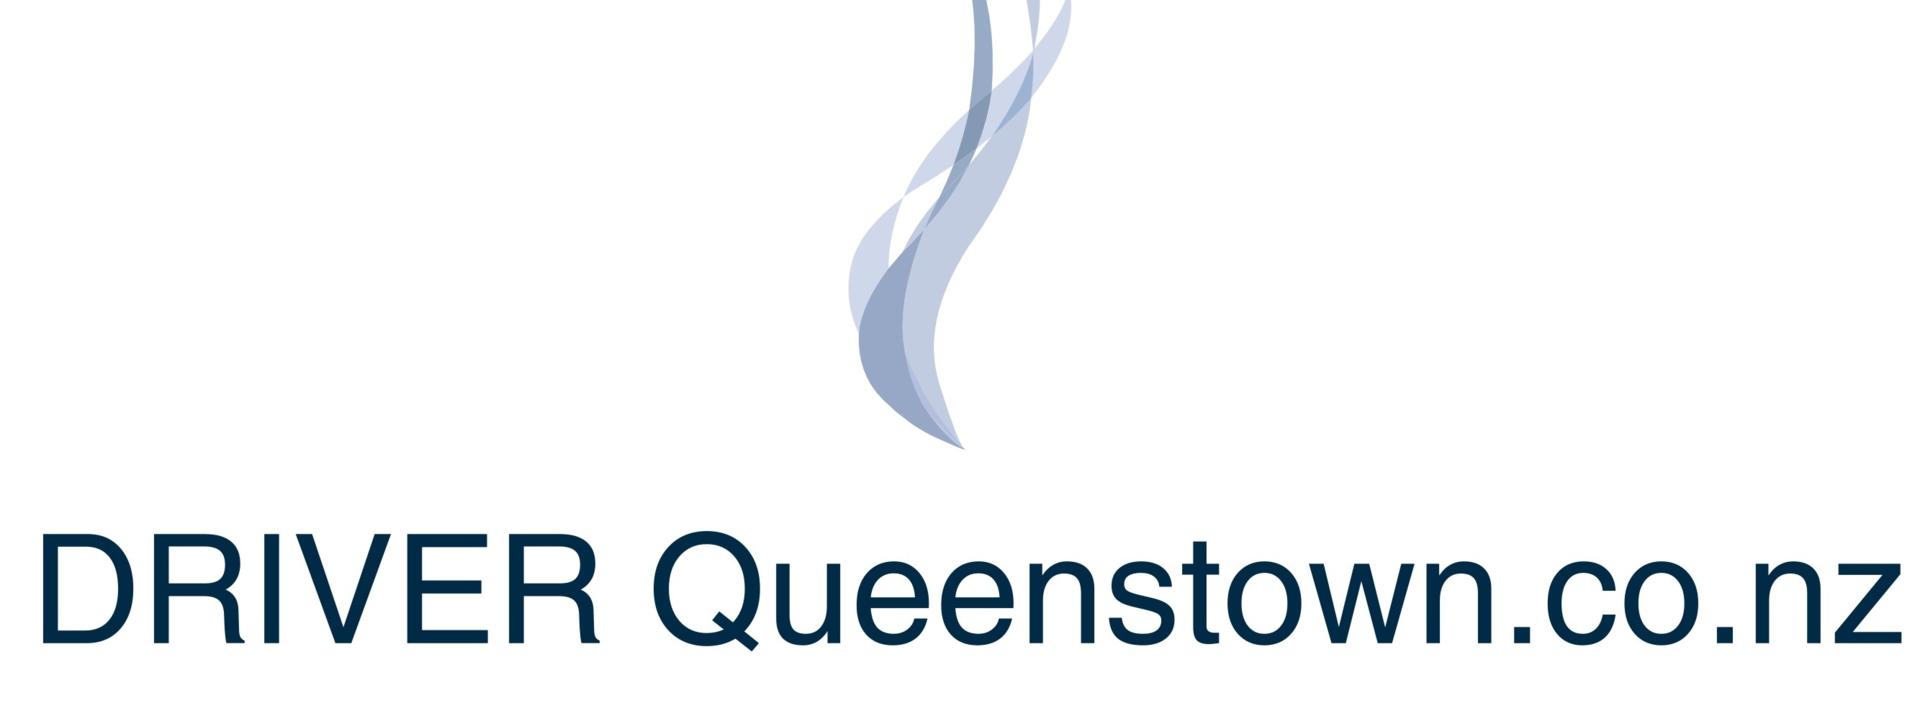 Logo: DRIVER Queenstown